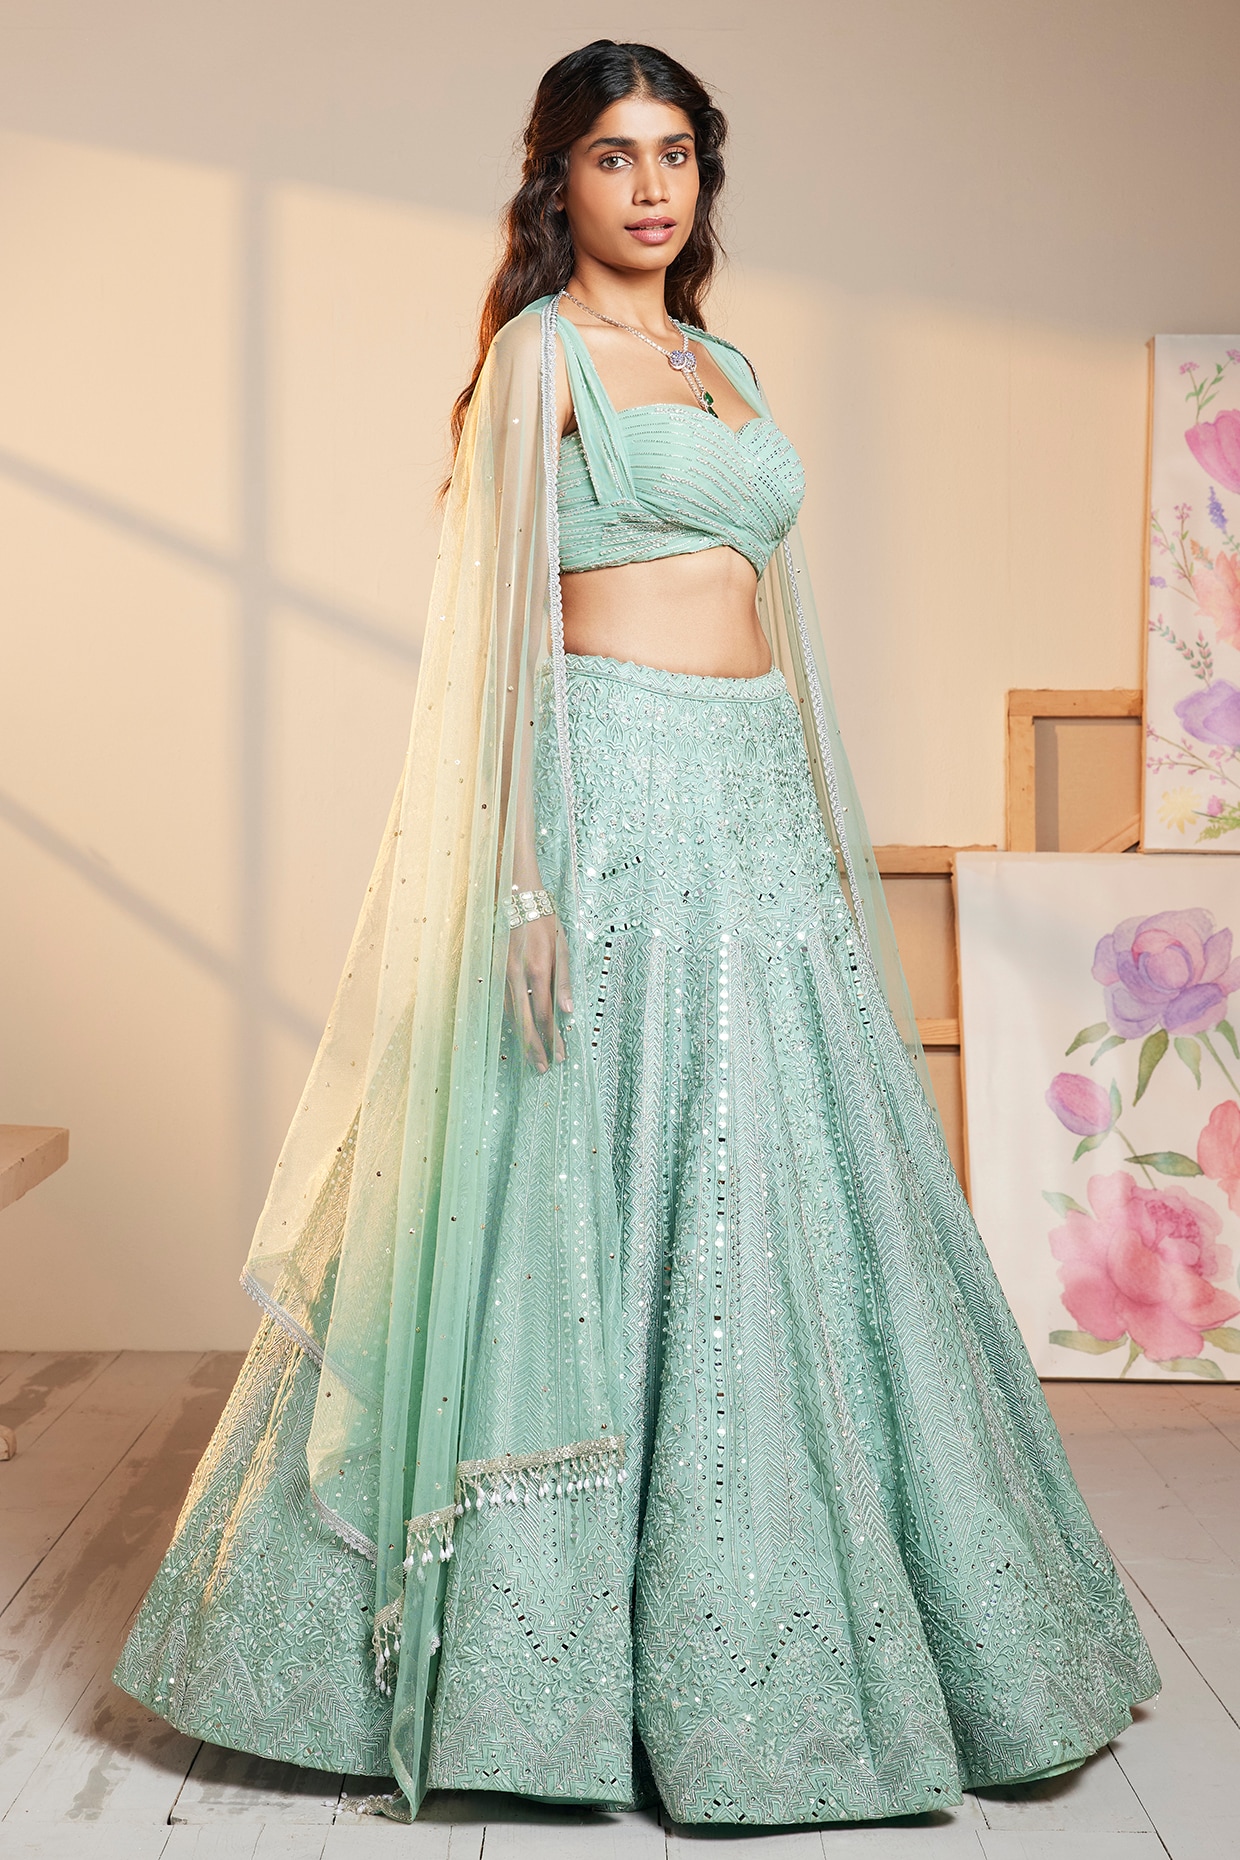 Aditi Rao Hydari in Chamee and Palak lehengas – South India Fashion